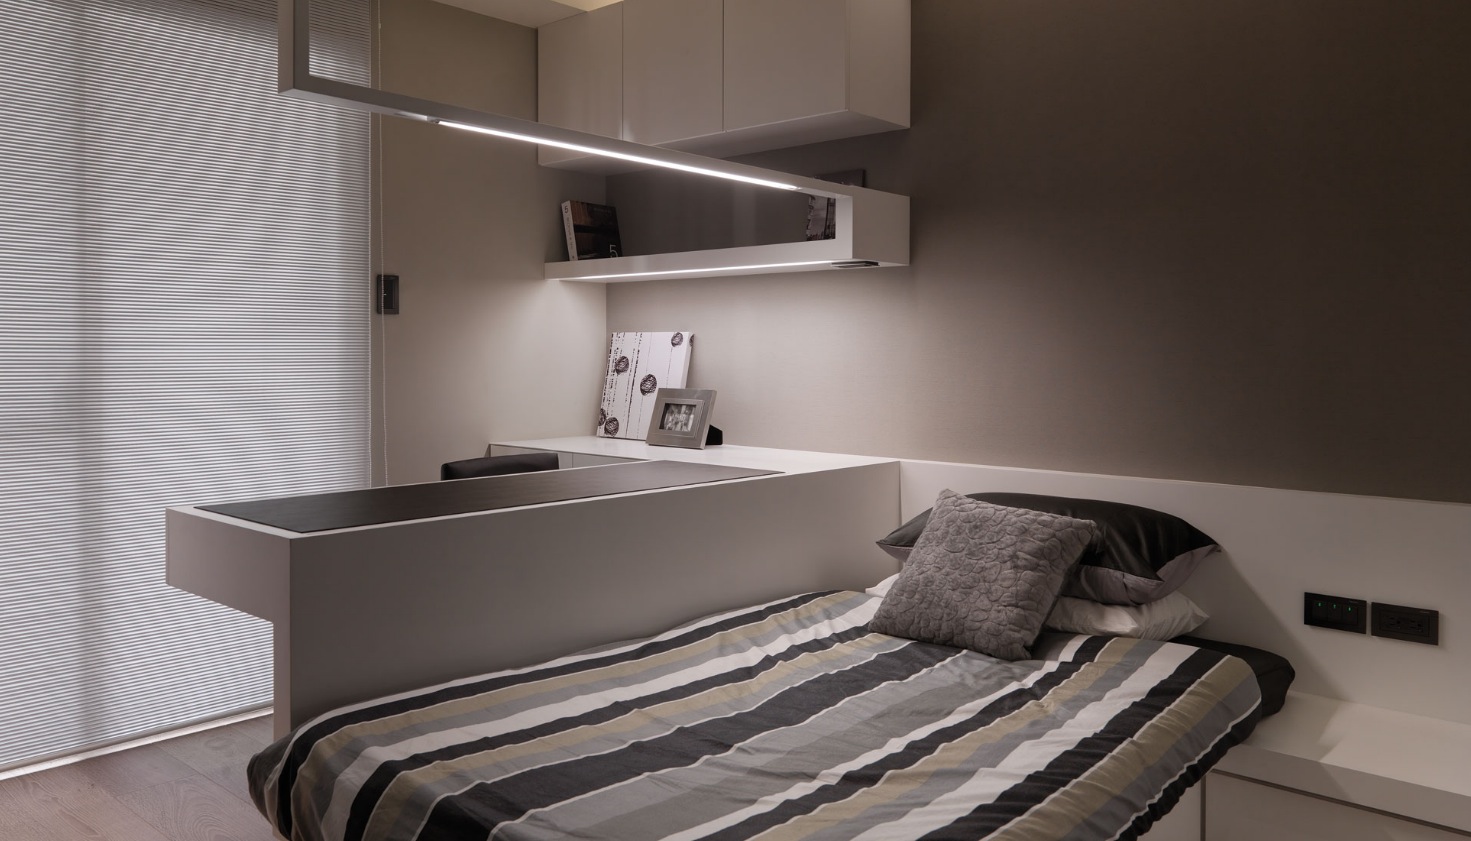 Loft bedroom design style